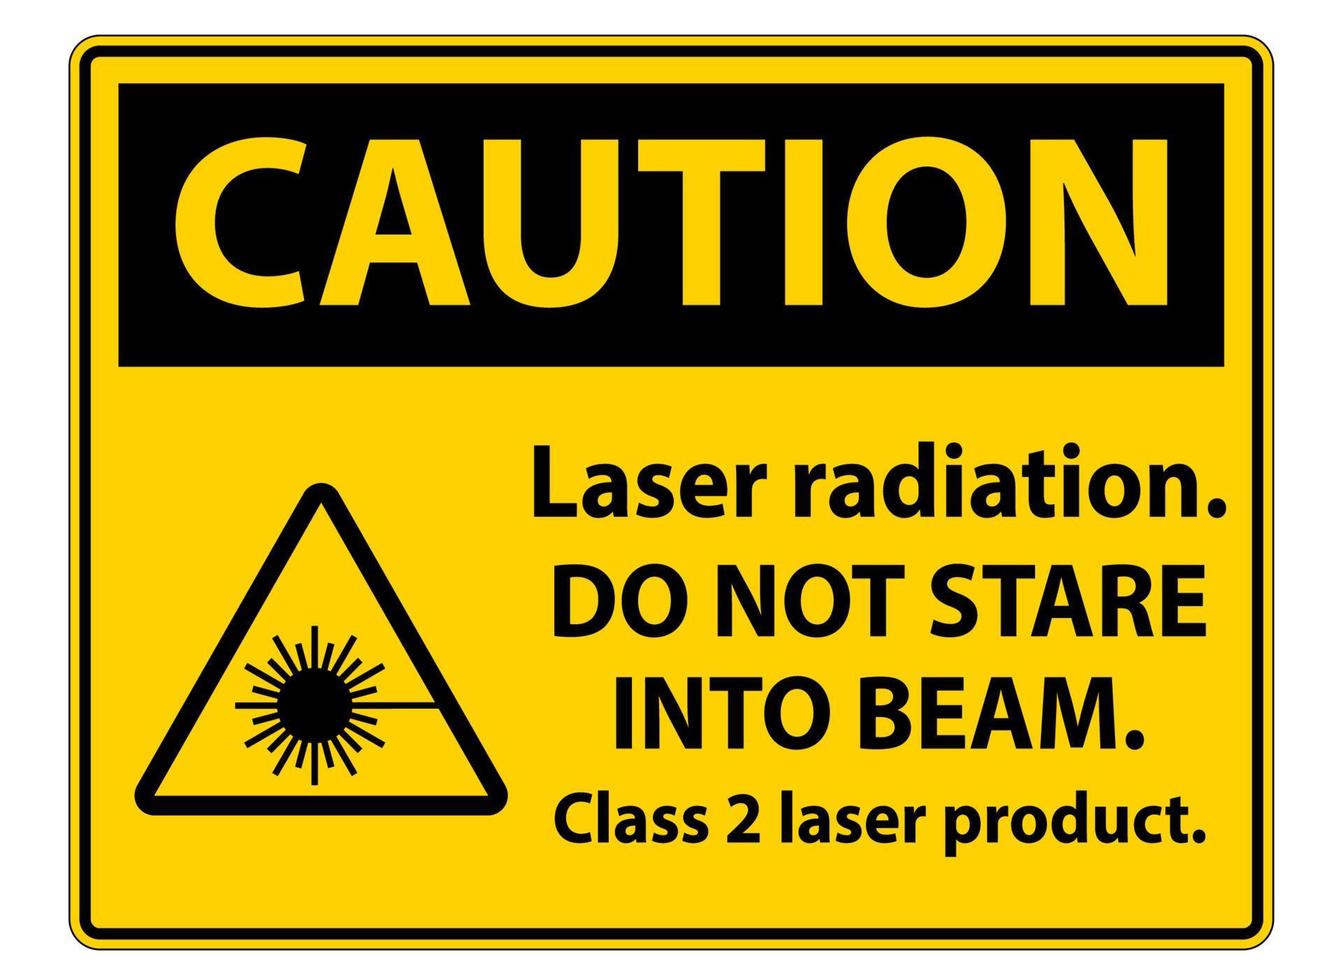 let op laserstraling, staar niet in de straal, klasse 2 laserproductbord op witte achtergrond vector